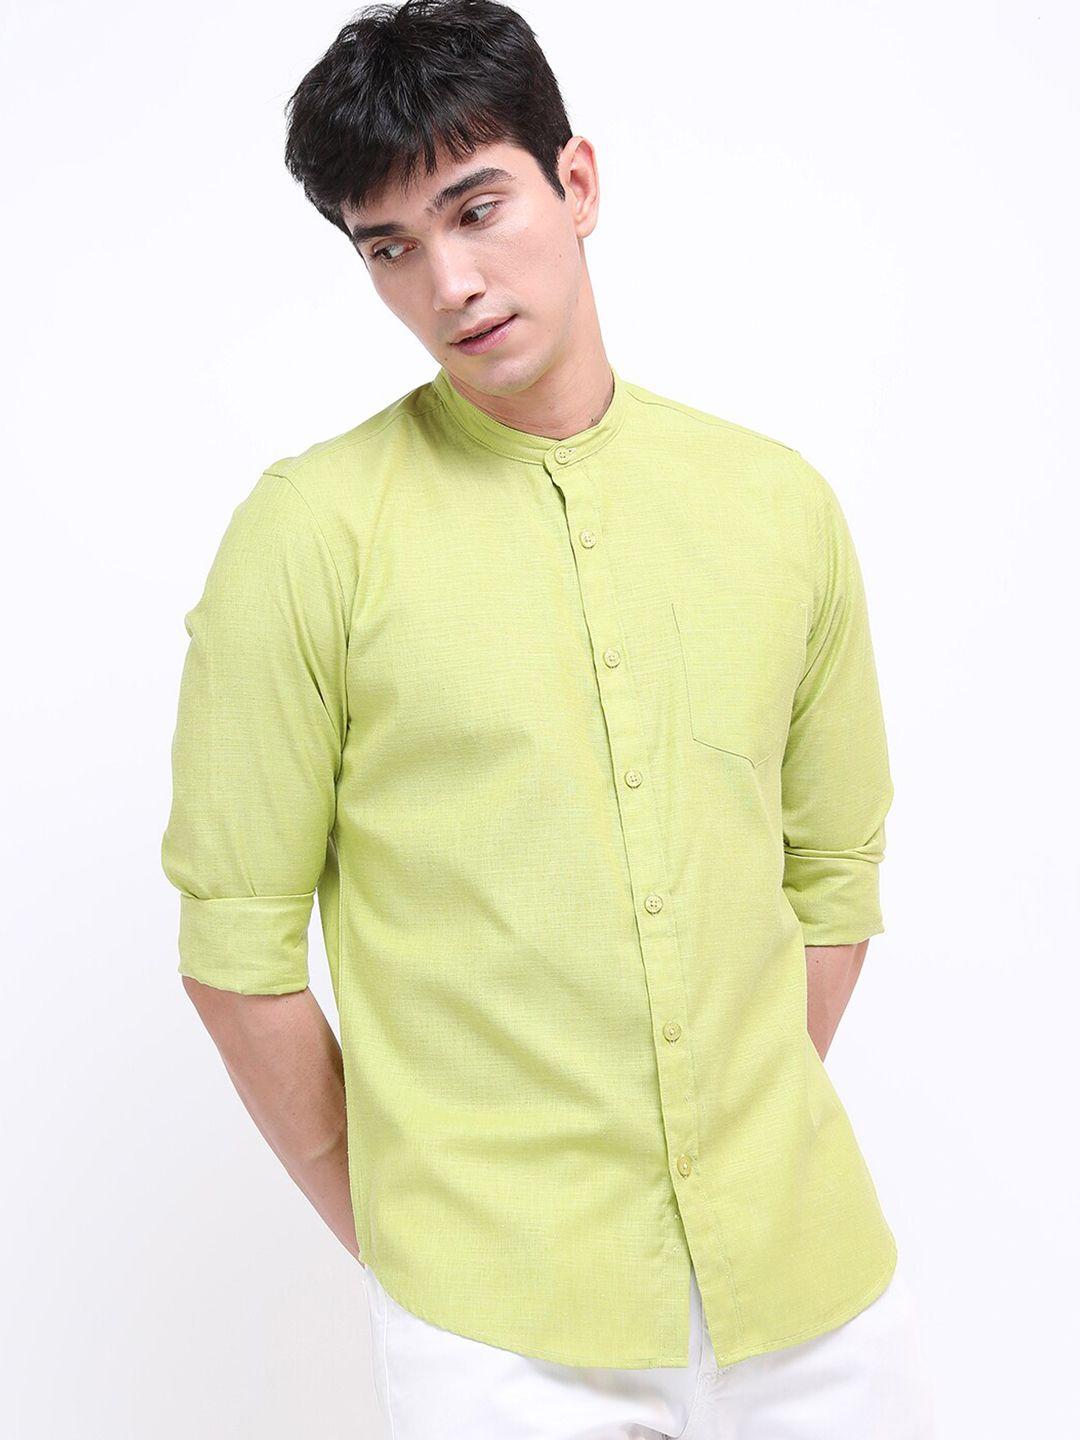 ketch-men-lime-green-slim-fit-casual-shirt